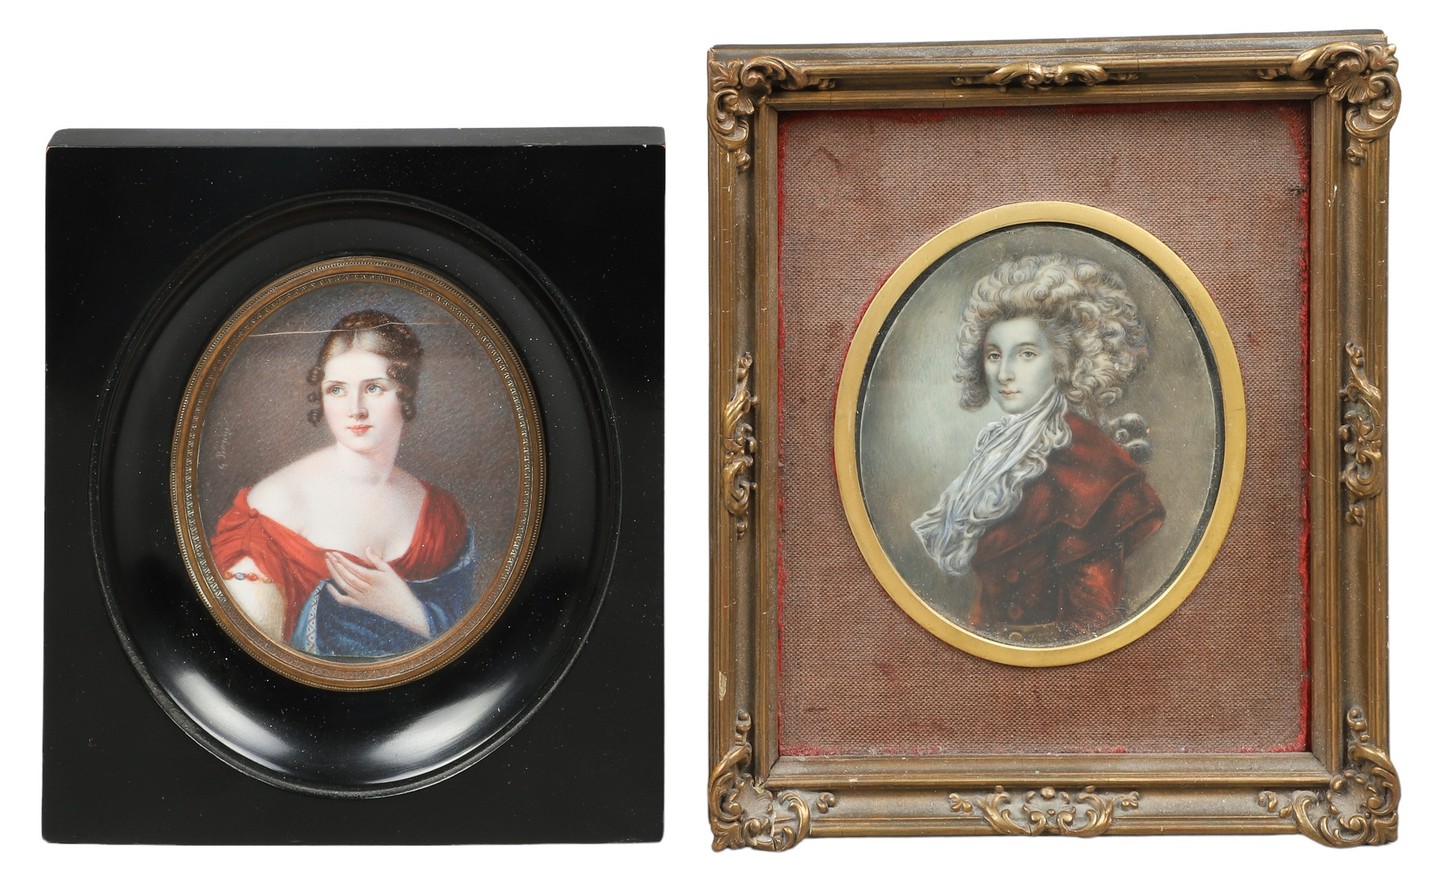  2 Miniature portrait paintings 317f3b